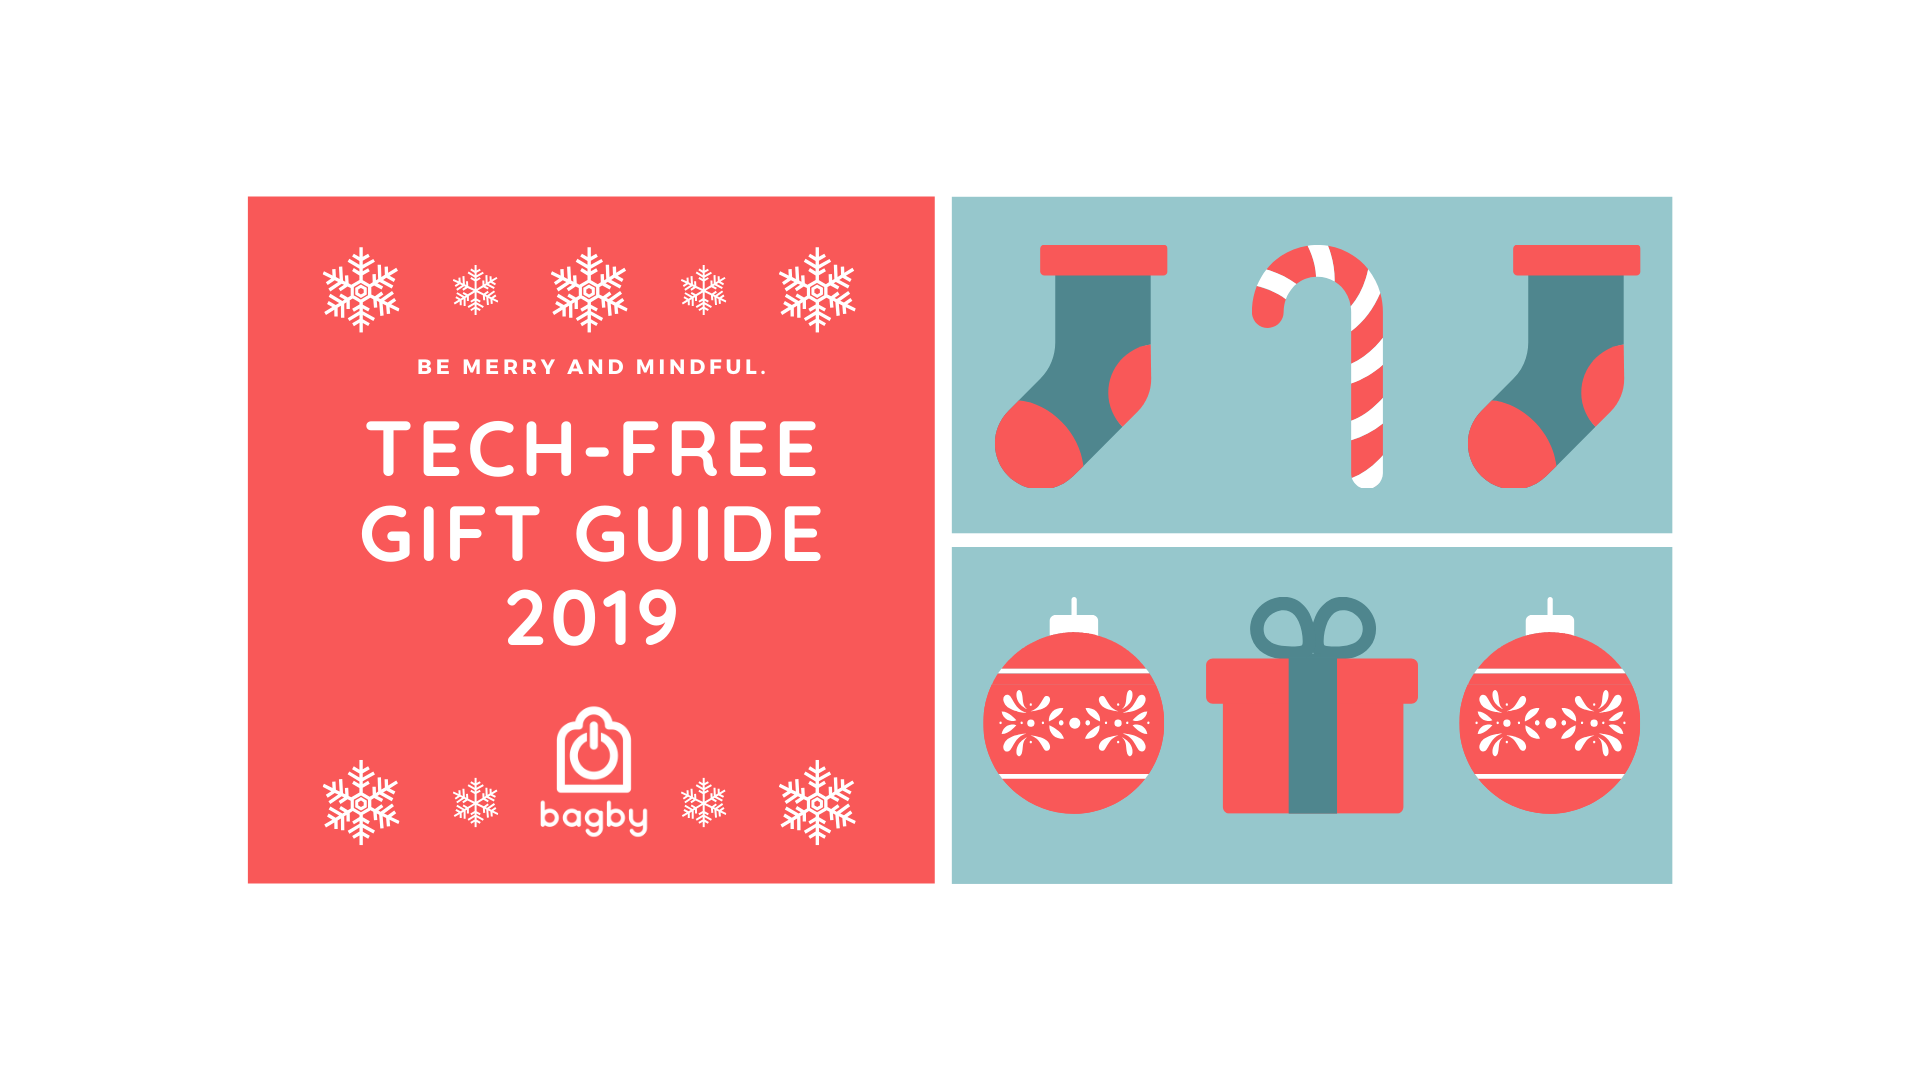 10 Digital Wellbeing / Detox Christmas Ideas - Gift Guide